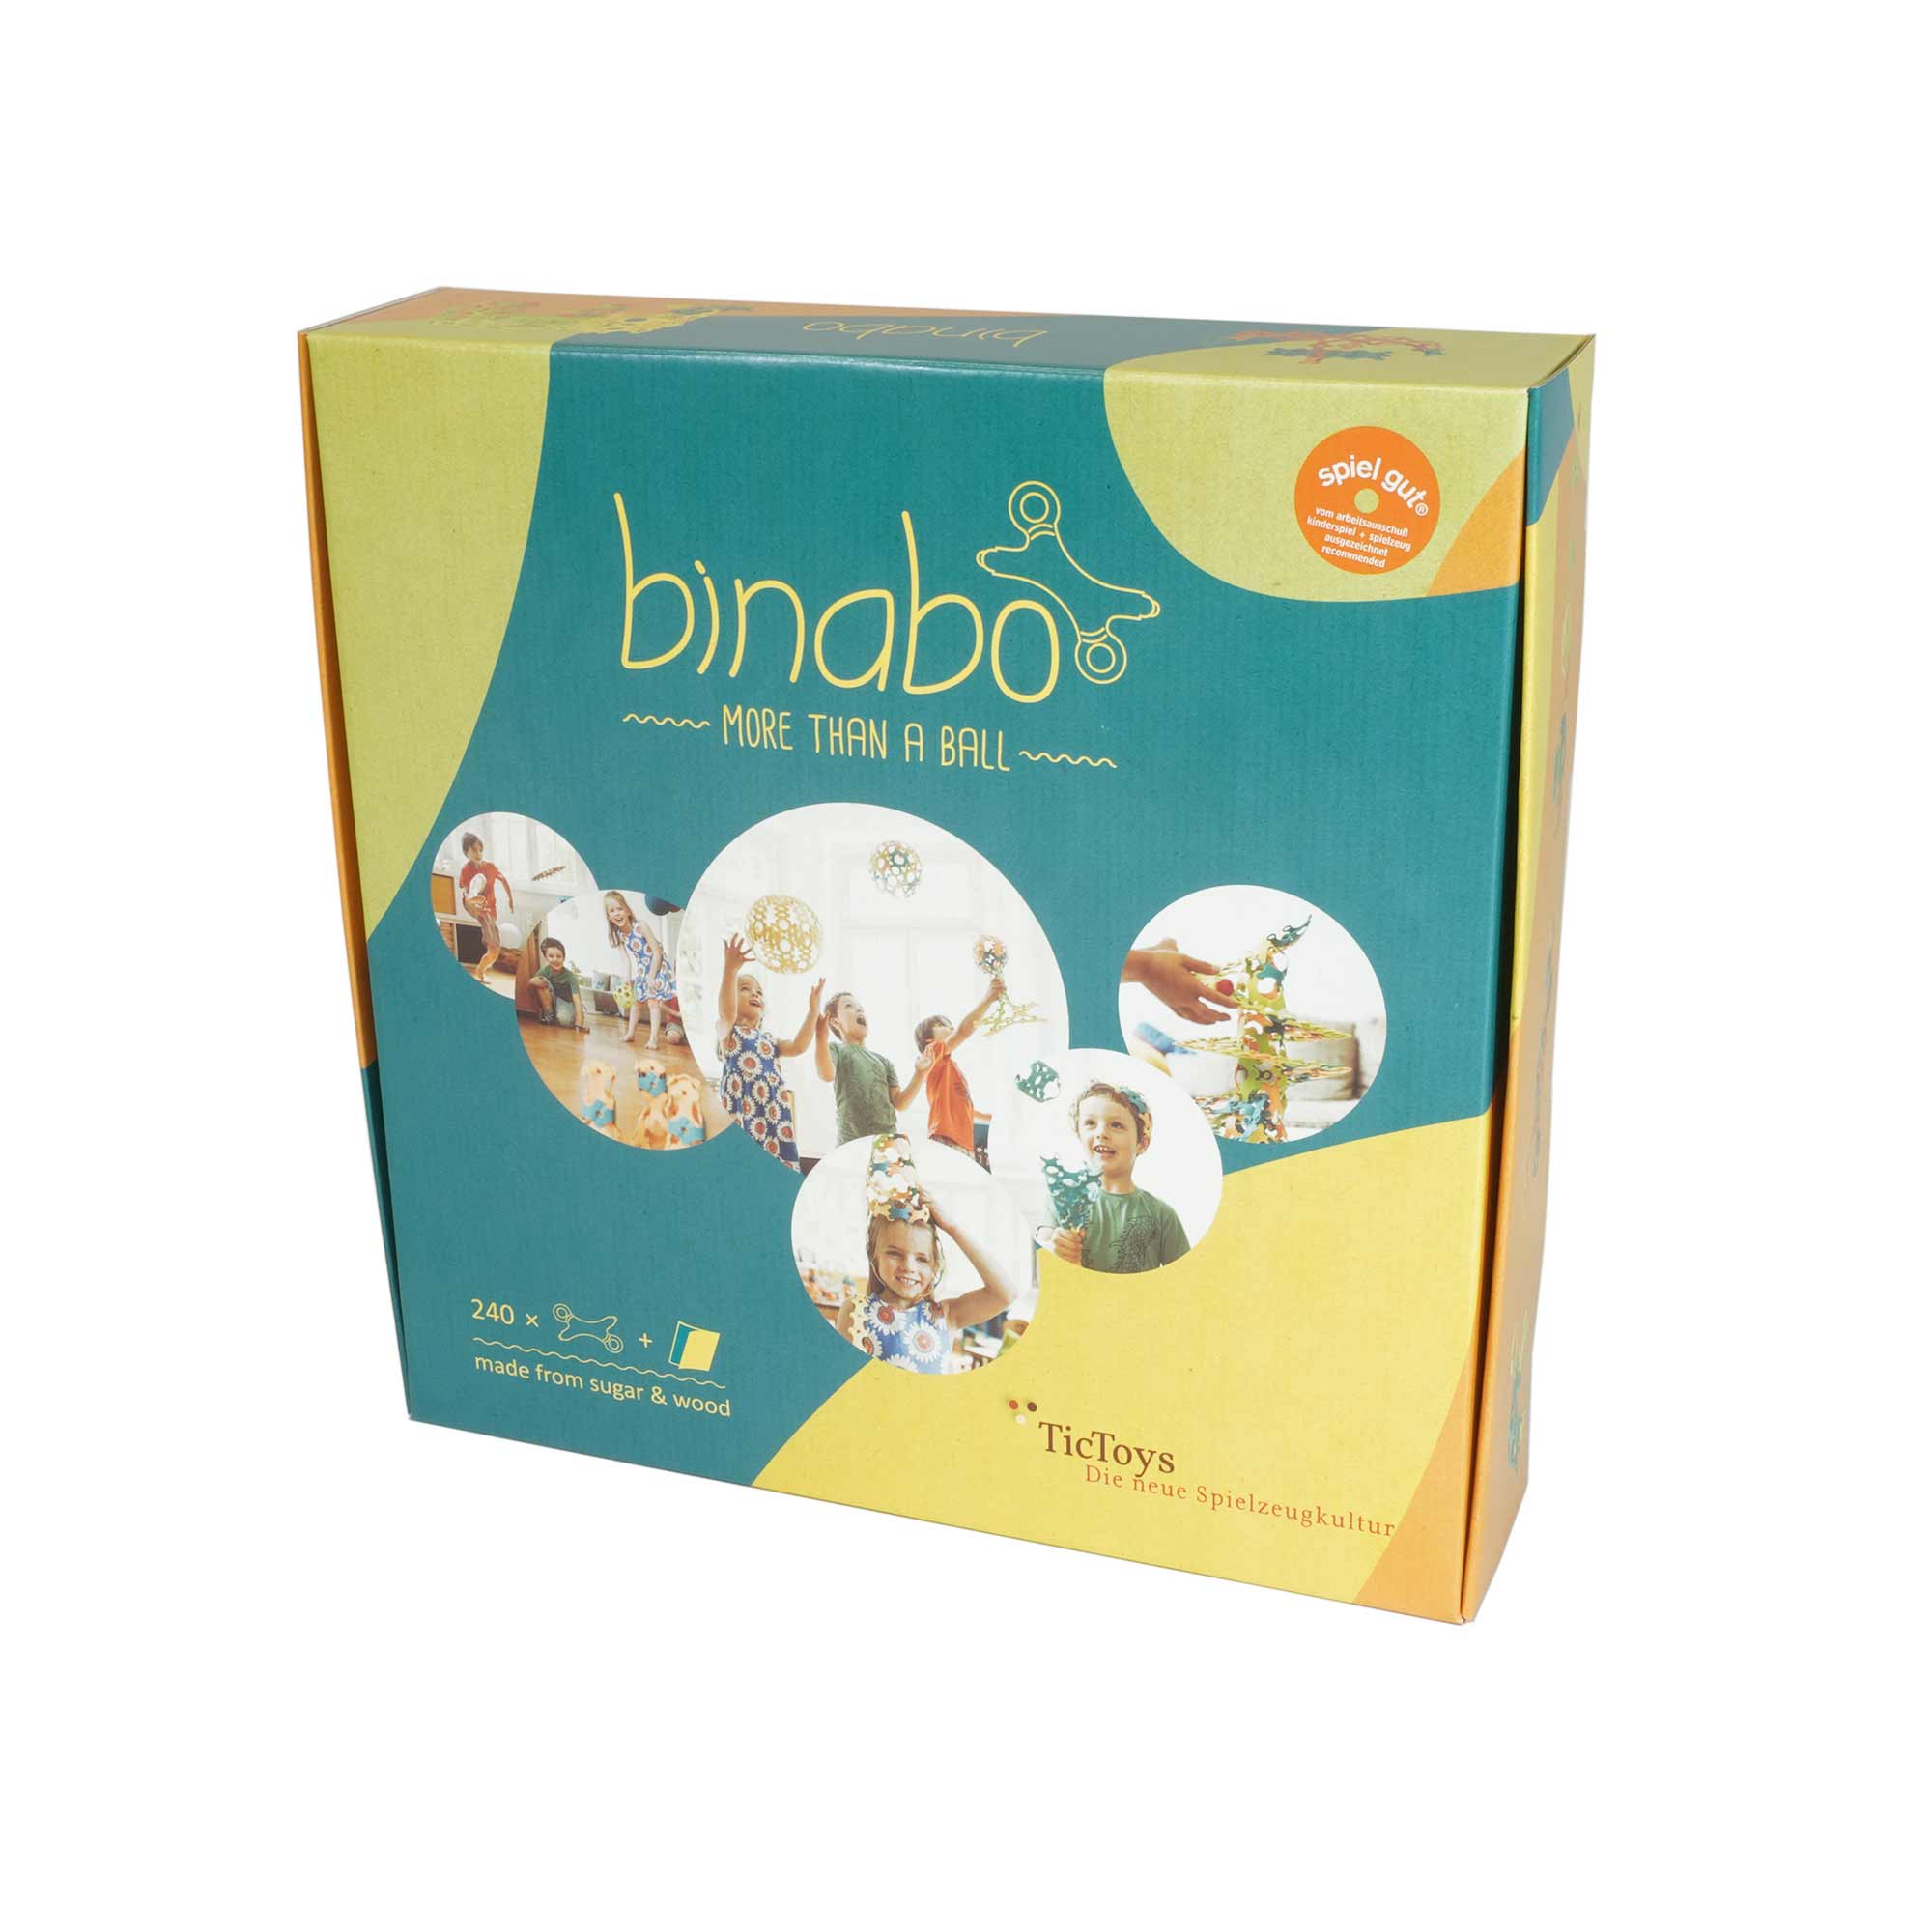 Binabo – 240 chips – mixed colour